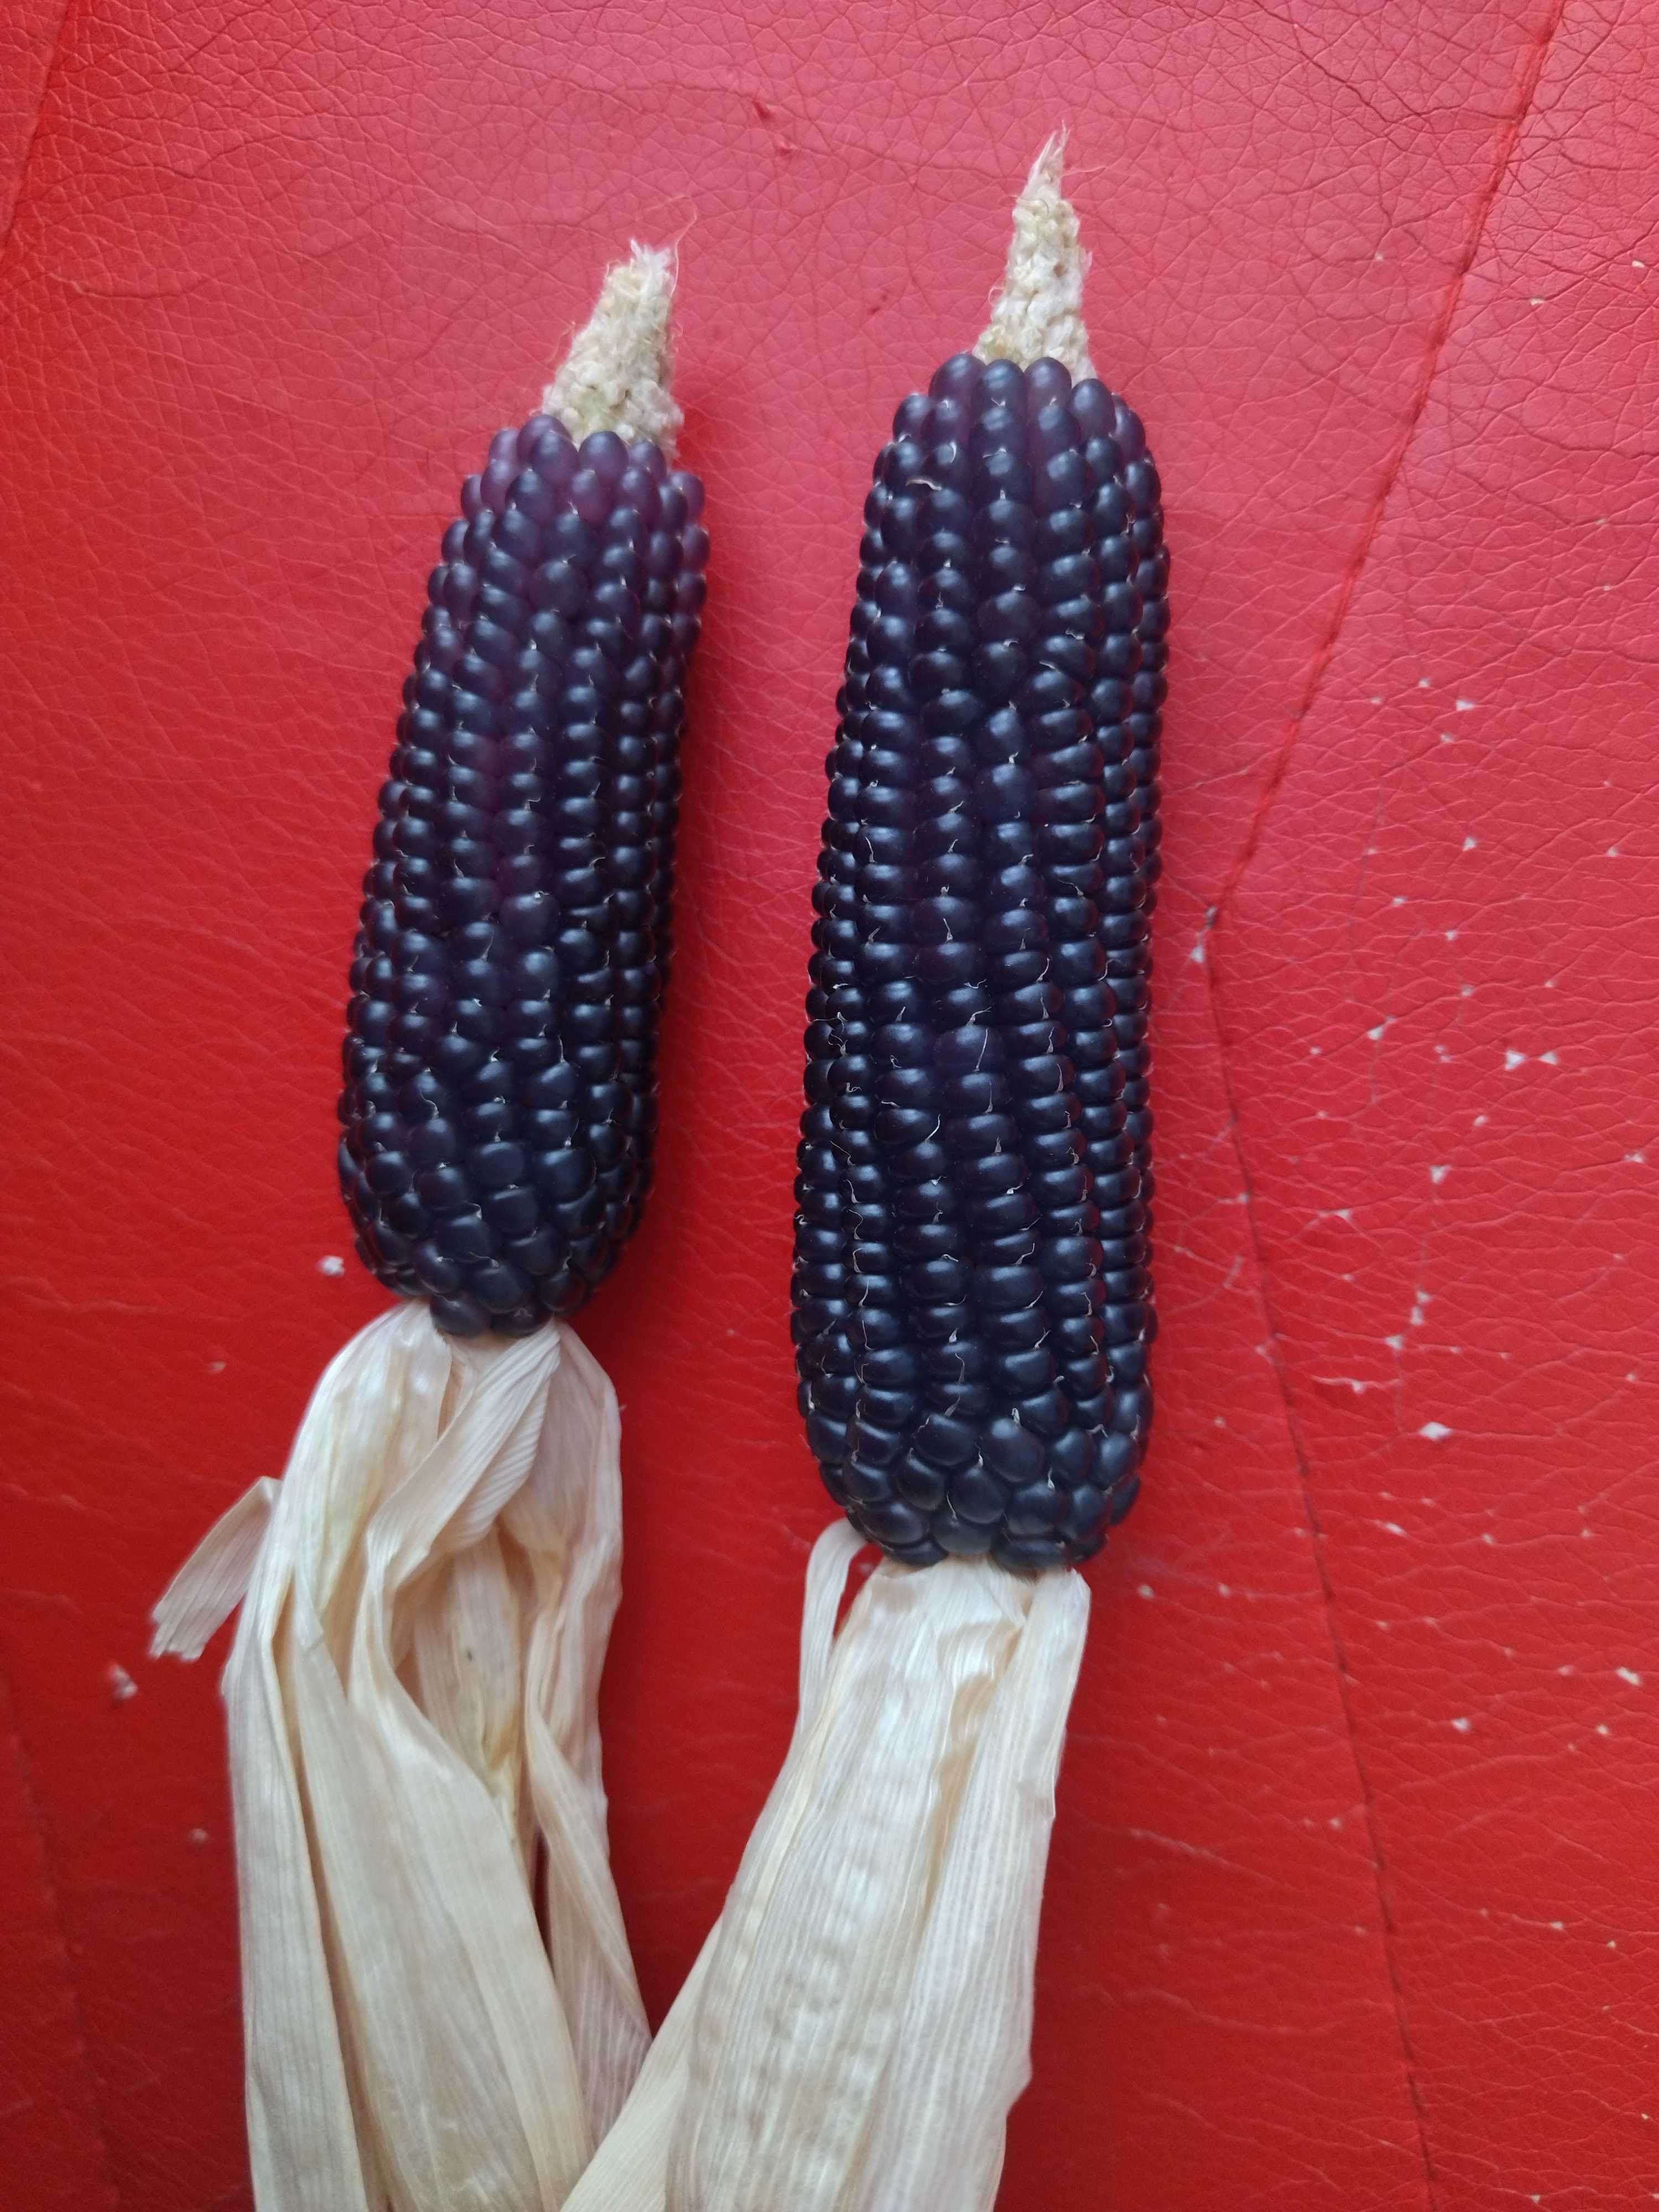 Пуканки, черна царевица - семена